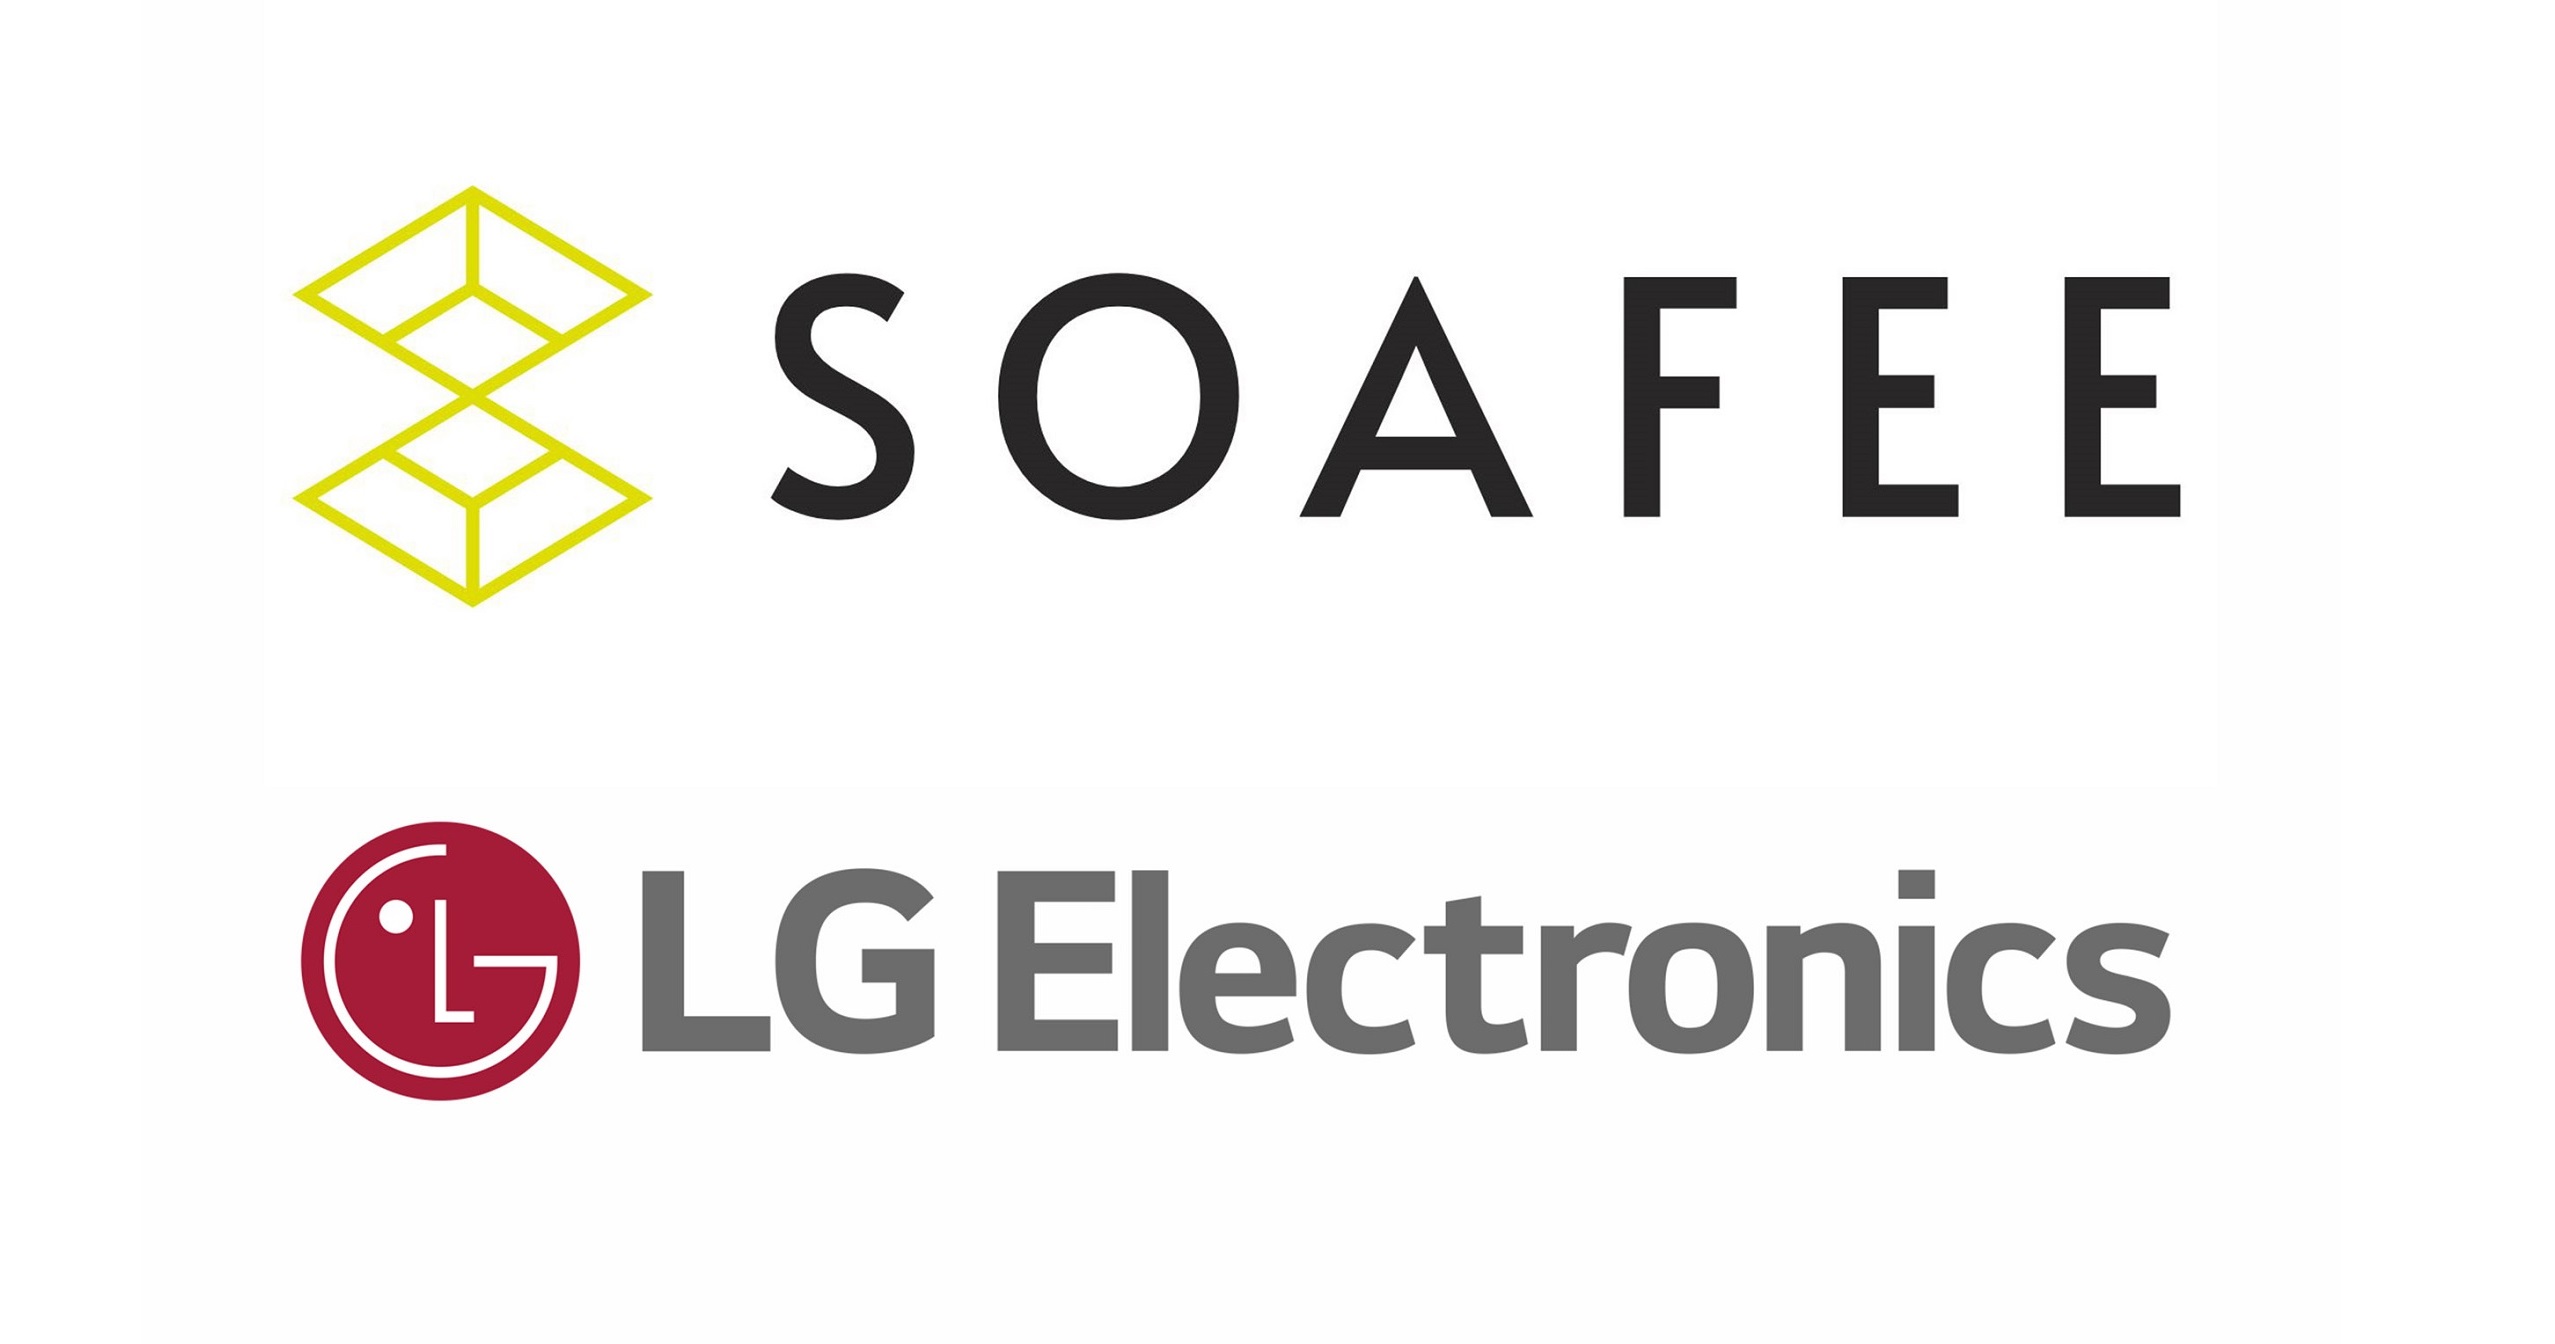 LG joins SOAFEE as 9th governing member for SDV technology